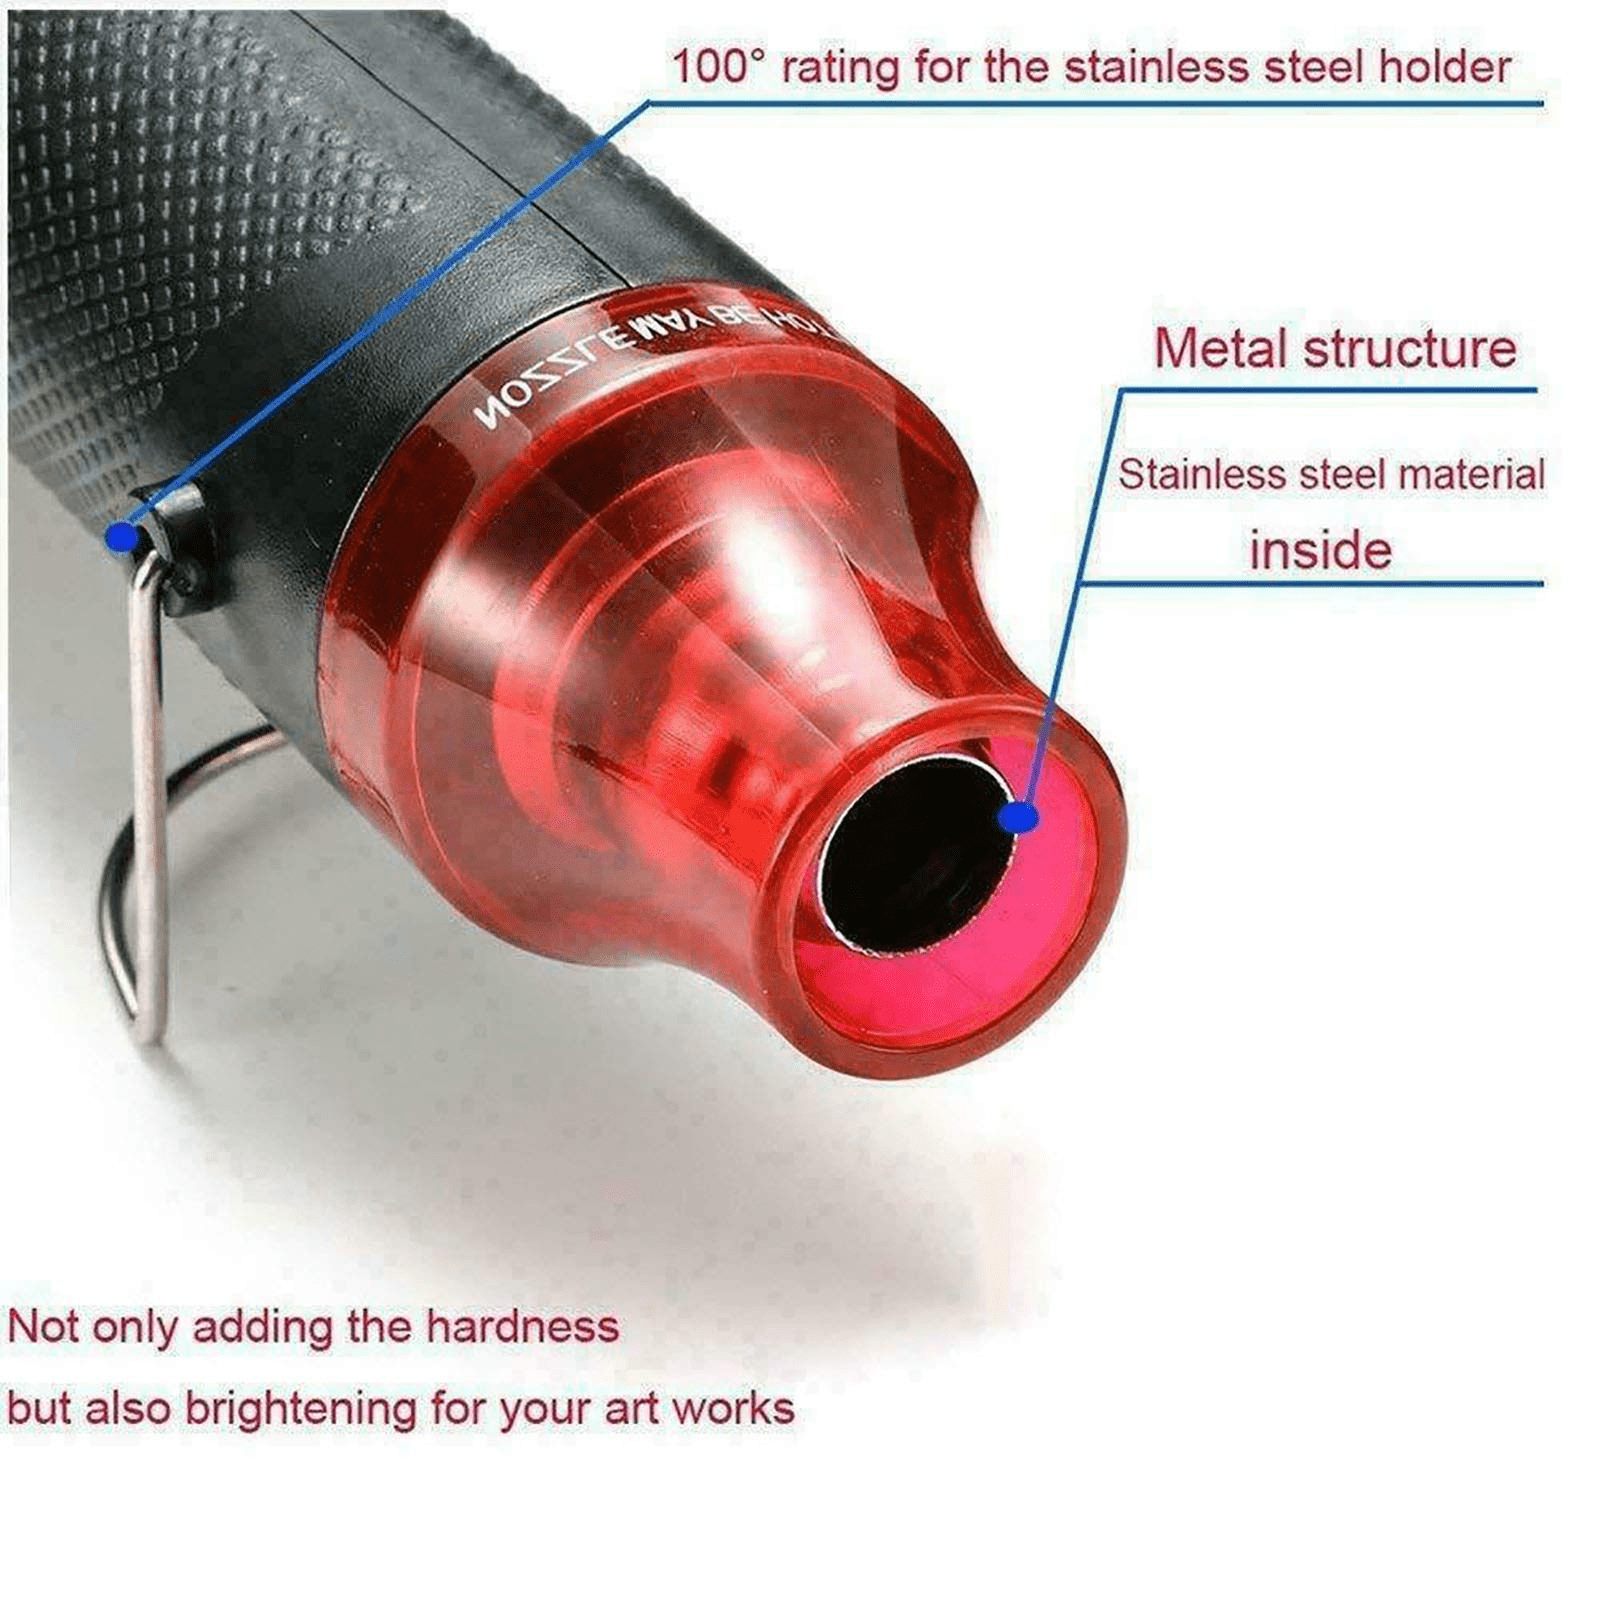 Mini Heat Gun for Diy Projects Review & Unboxing  Cheap Hot Air Gun 300W  Craft, Heat Shrink 